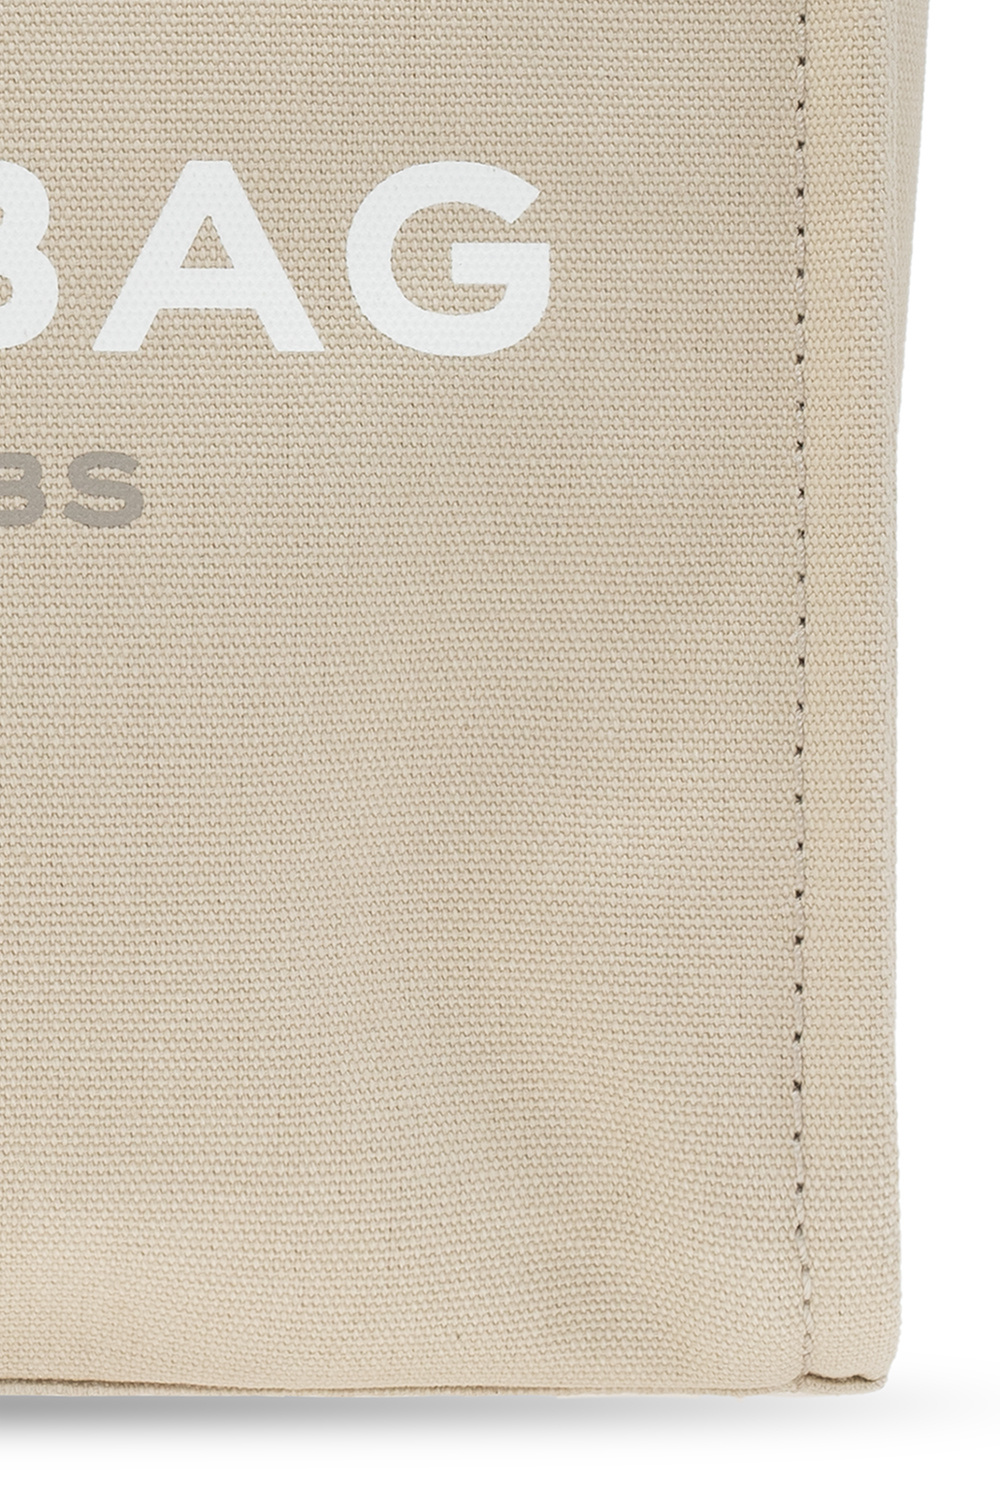 Marc Jacobs (The) ‘The Book Bag’ shoulder bag